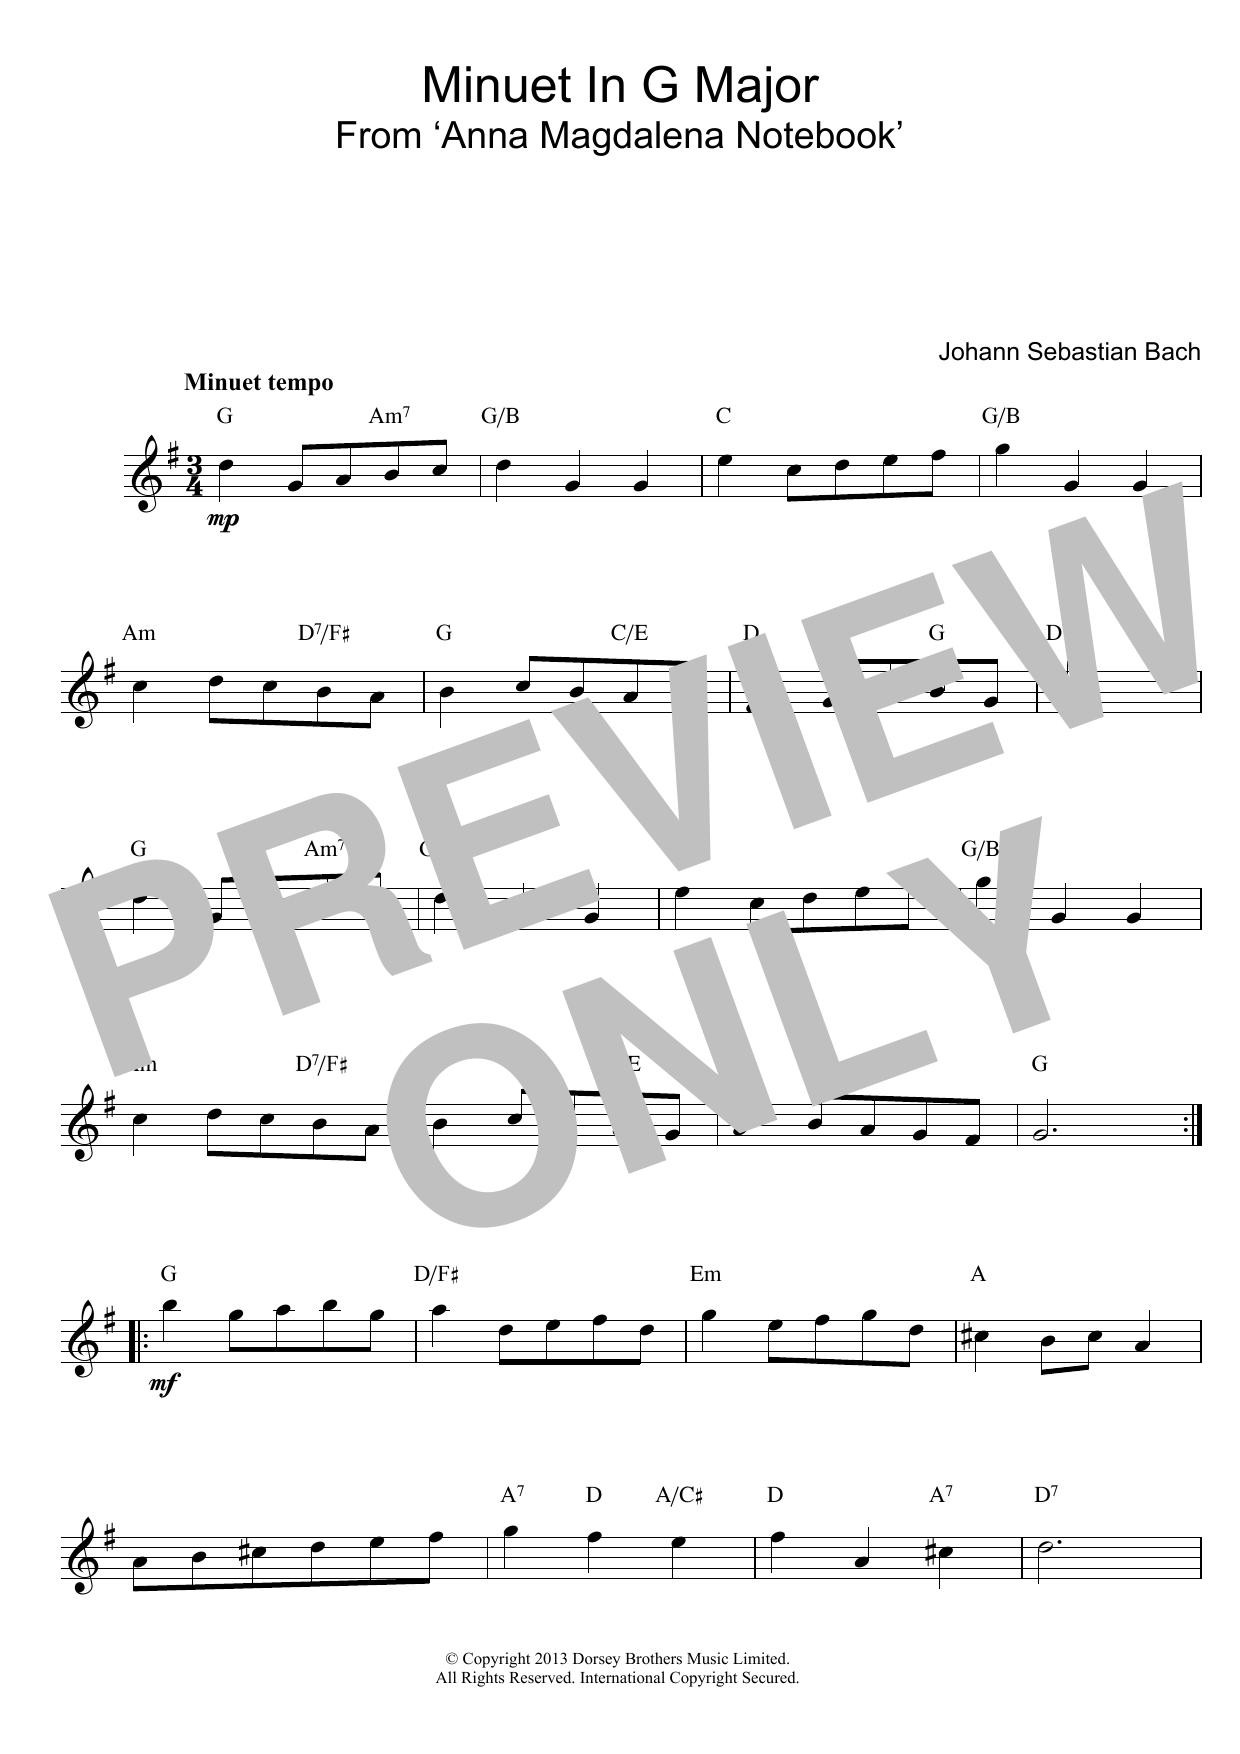 Johann Sebastian Bach Minuet In G Sheet Music Notes & Chords for Guitar Tab - Download or Print PDF